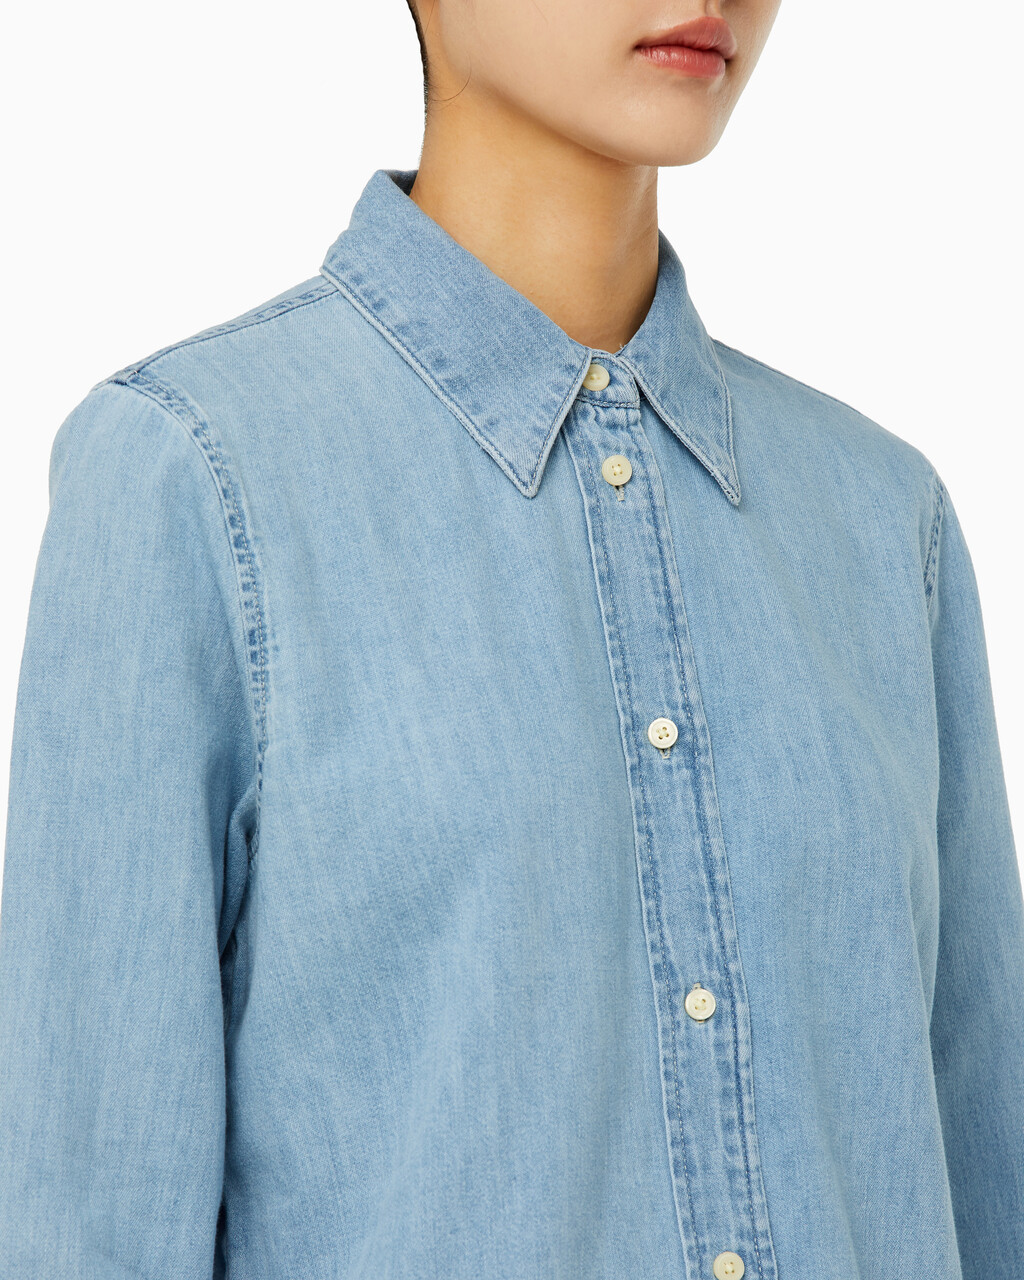 Buy 여성 롱슬리브 클래식 샴브레이 셔츠 in color LIGHT BLUE